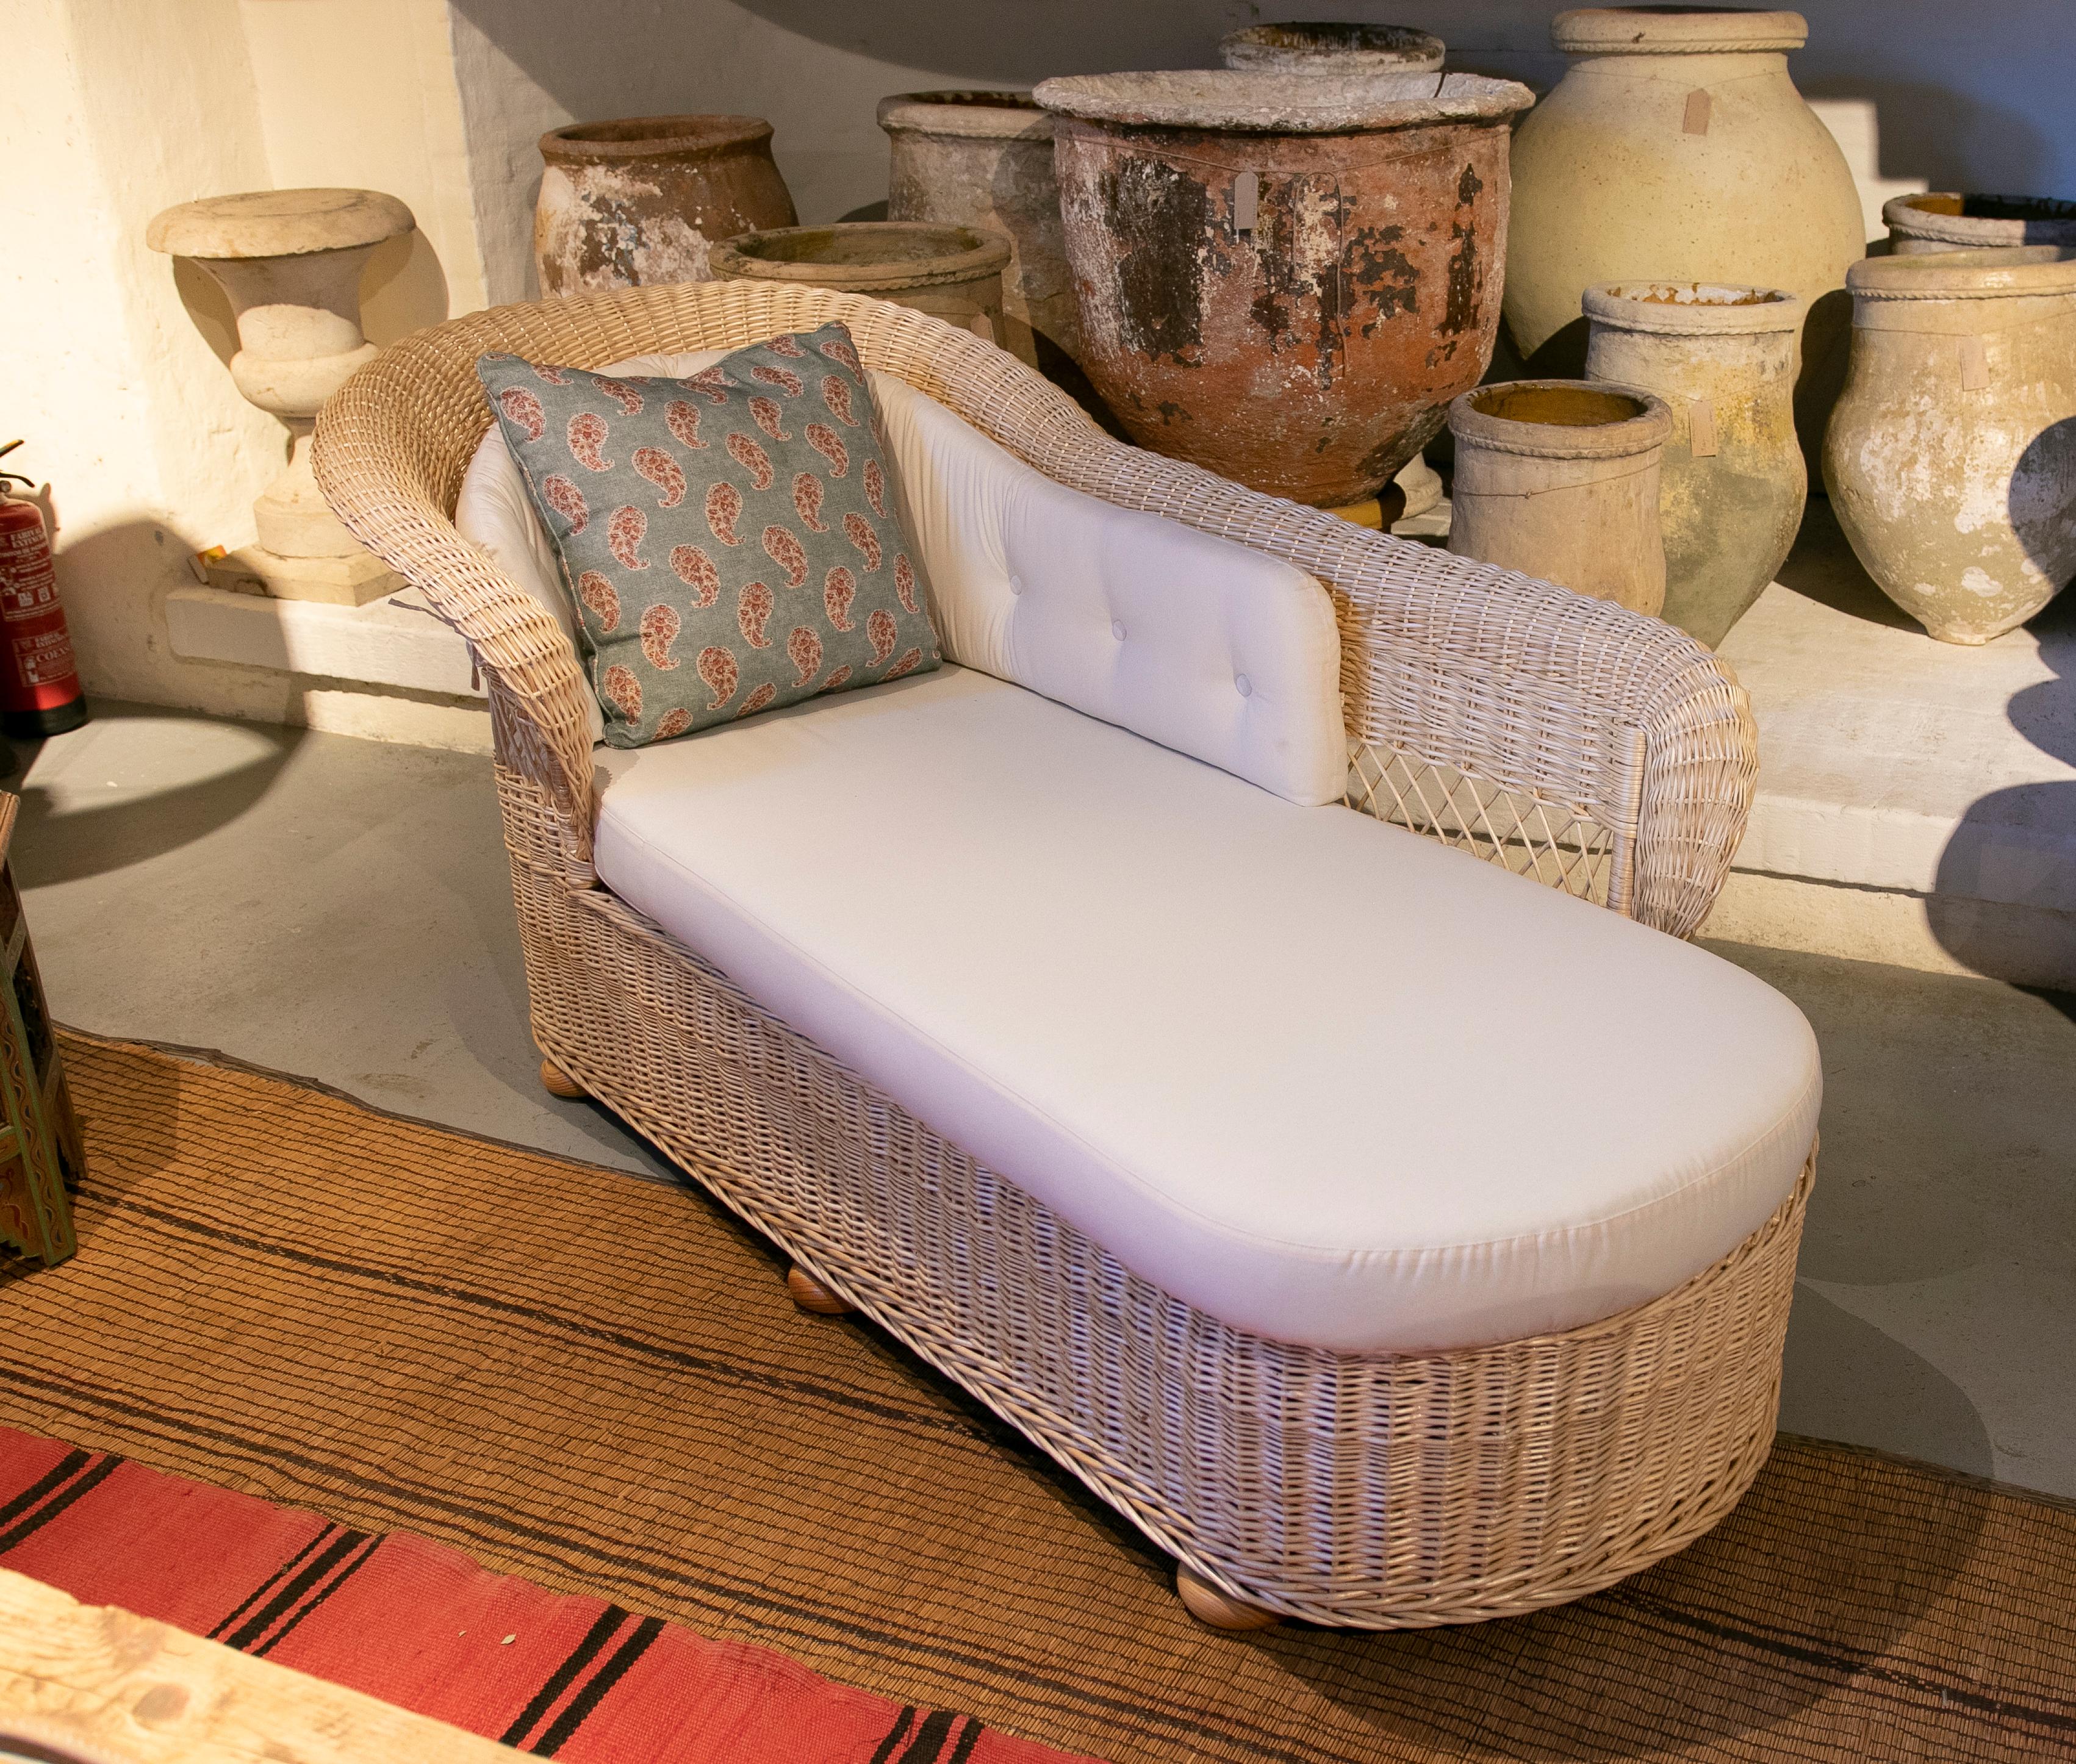 Spanish handmade wicker chaise longue with white upholstery.